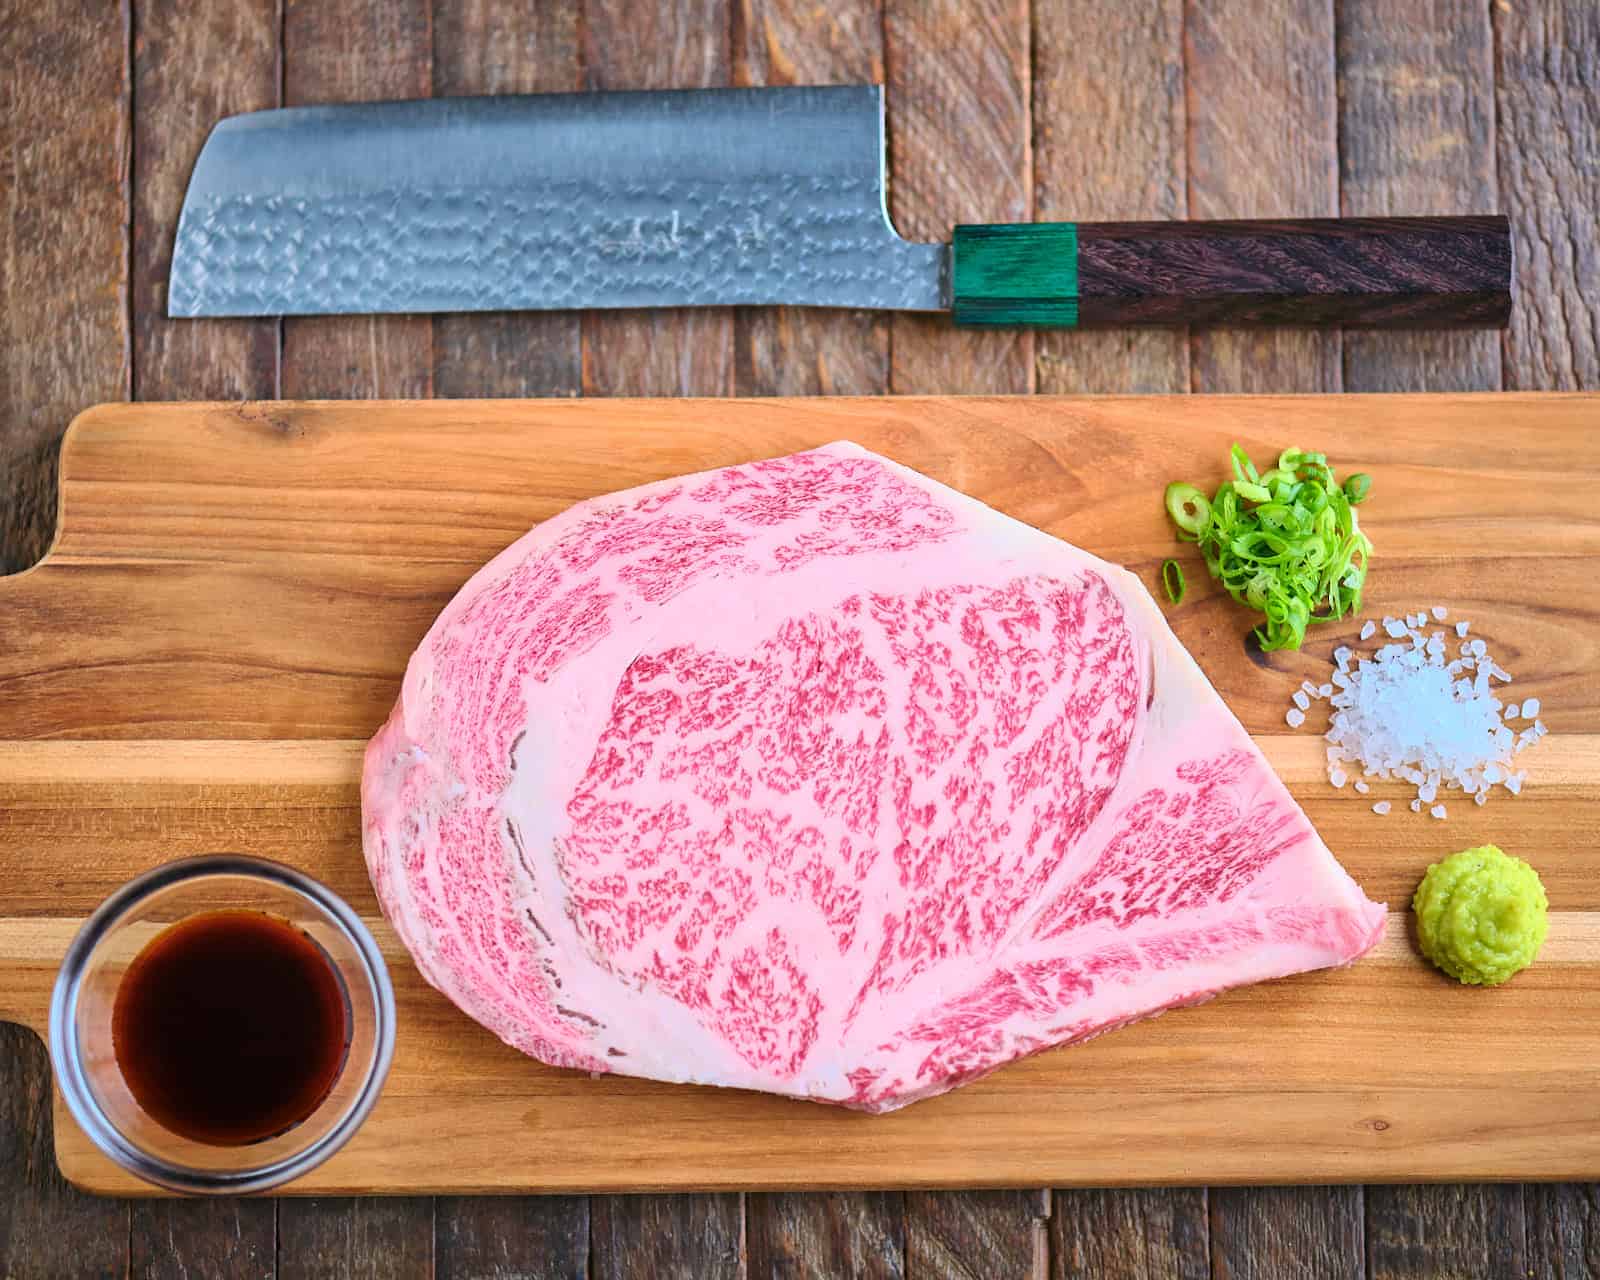 A Wagyu ribeye steak on a cutting board with wasabi, ponzu sauce, salt, green onions, and a knife.